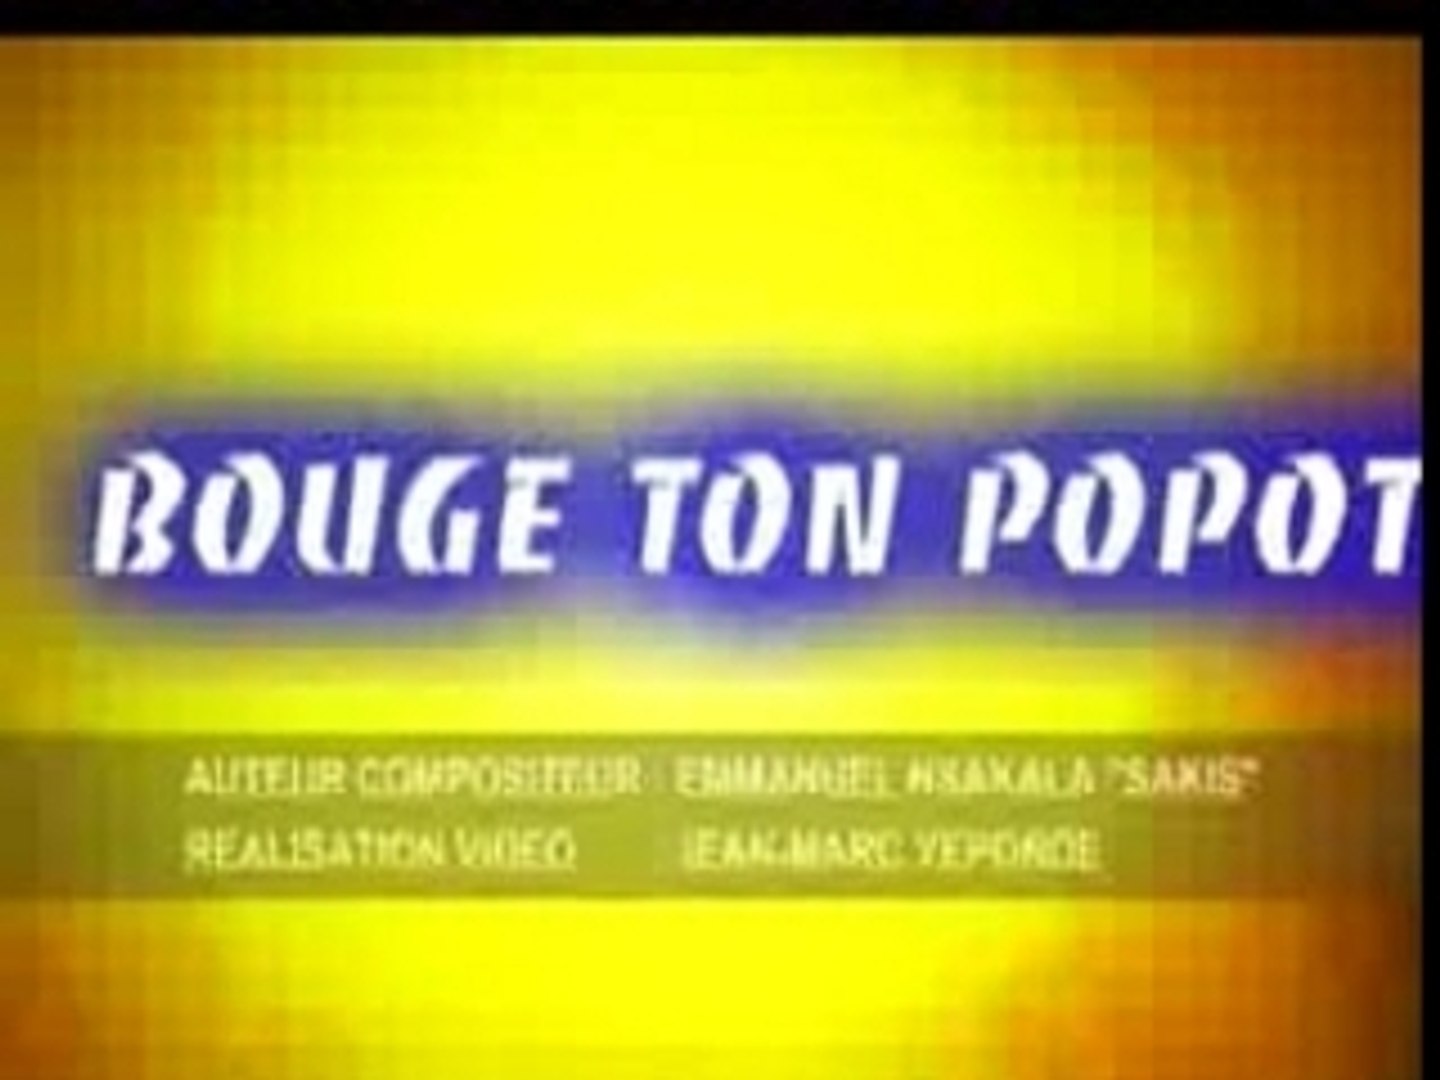 Sakis Bouge ton popotin - Vidéo Dailymotion